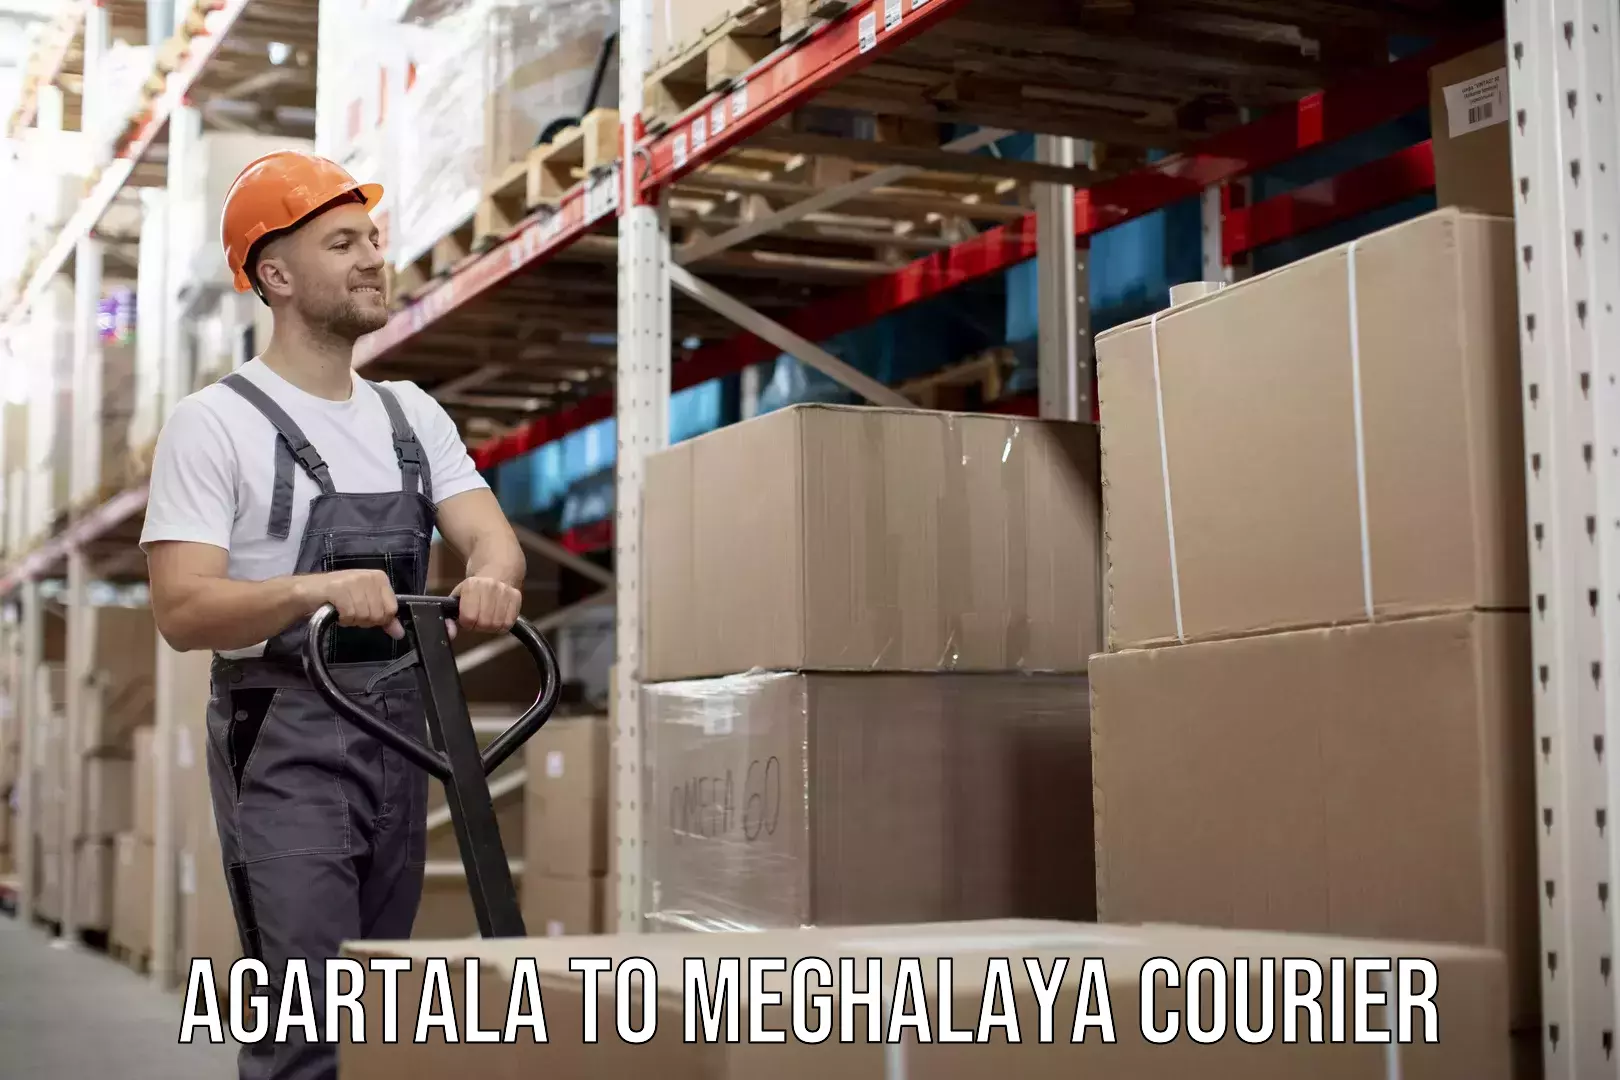 Courier service innovation Agartala to Meghalaya